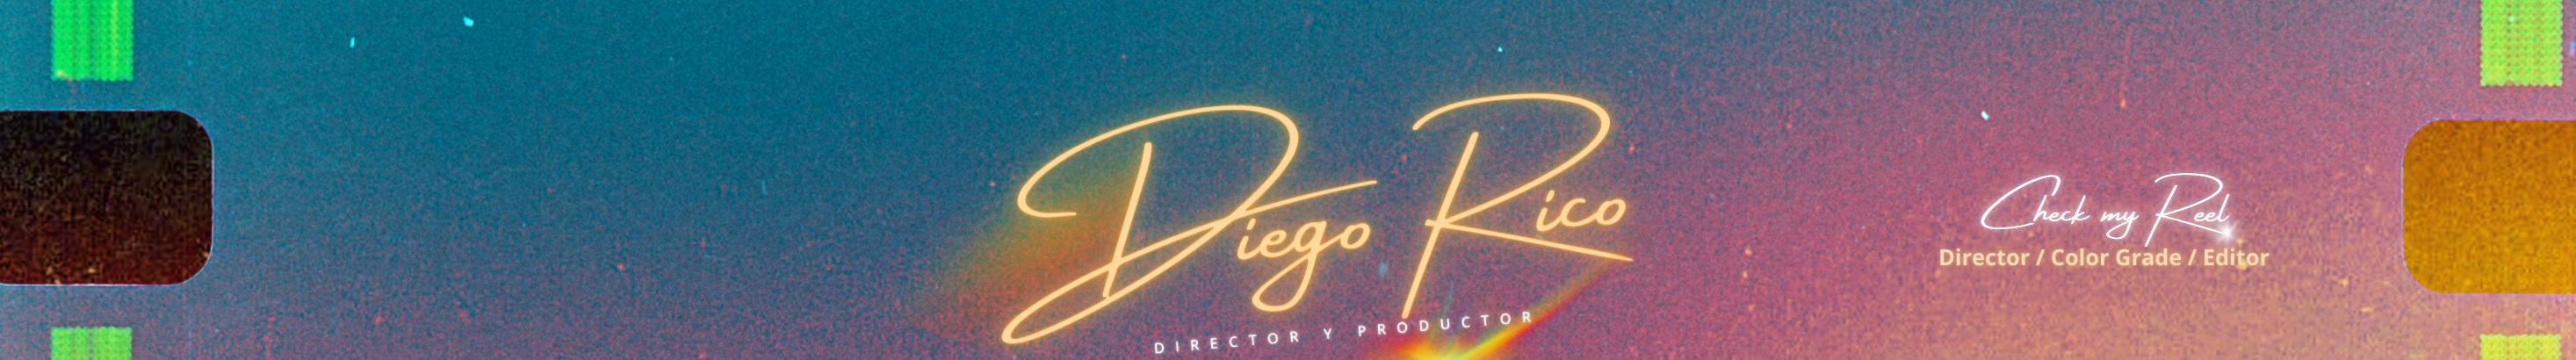 Profielbanner van Diego Rico